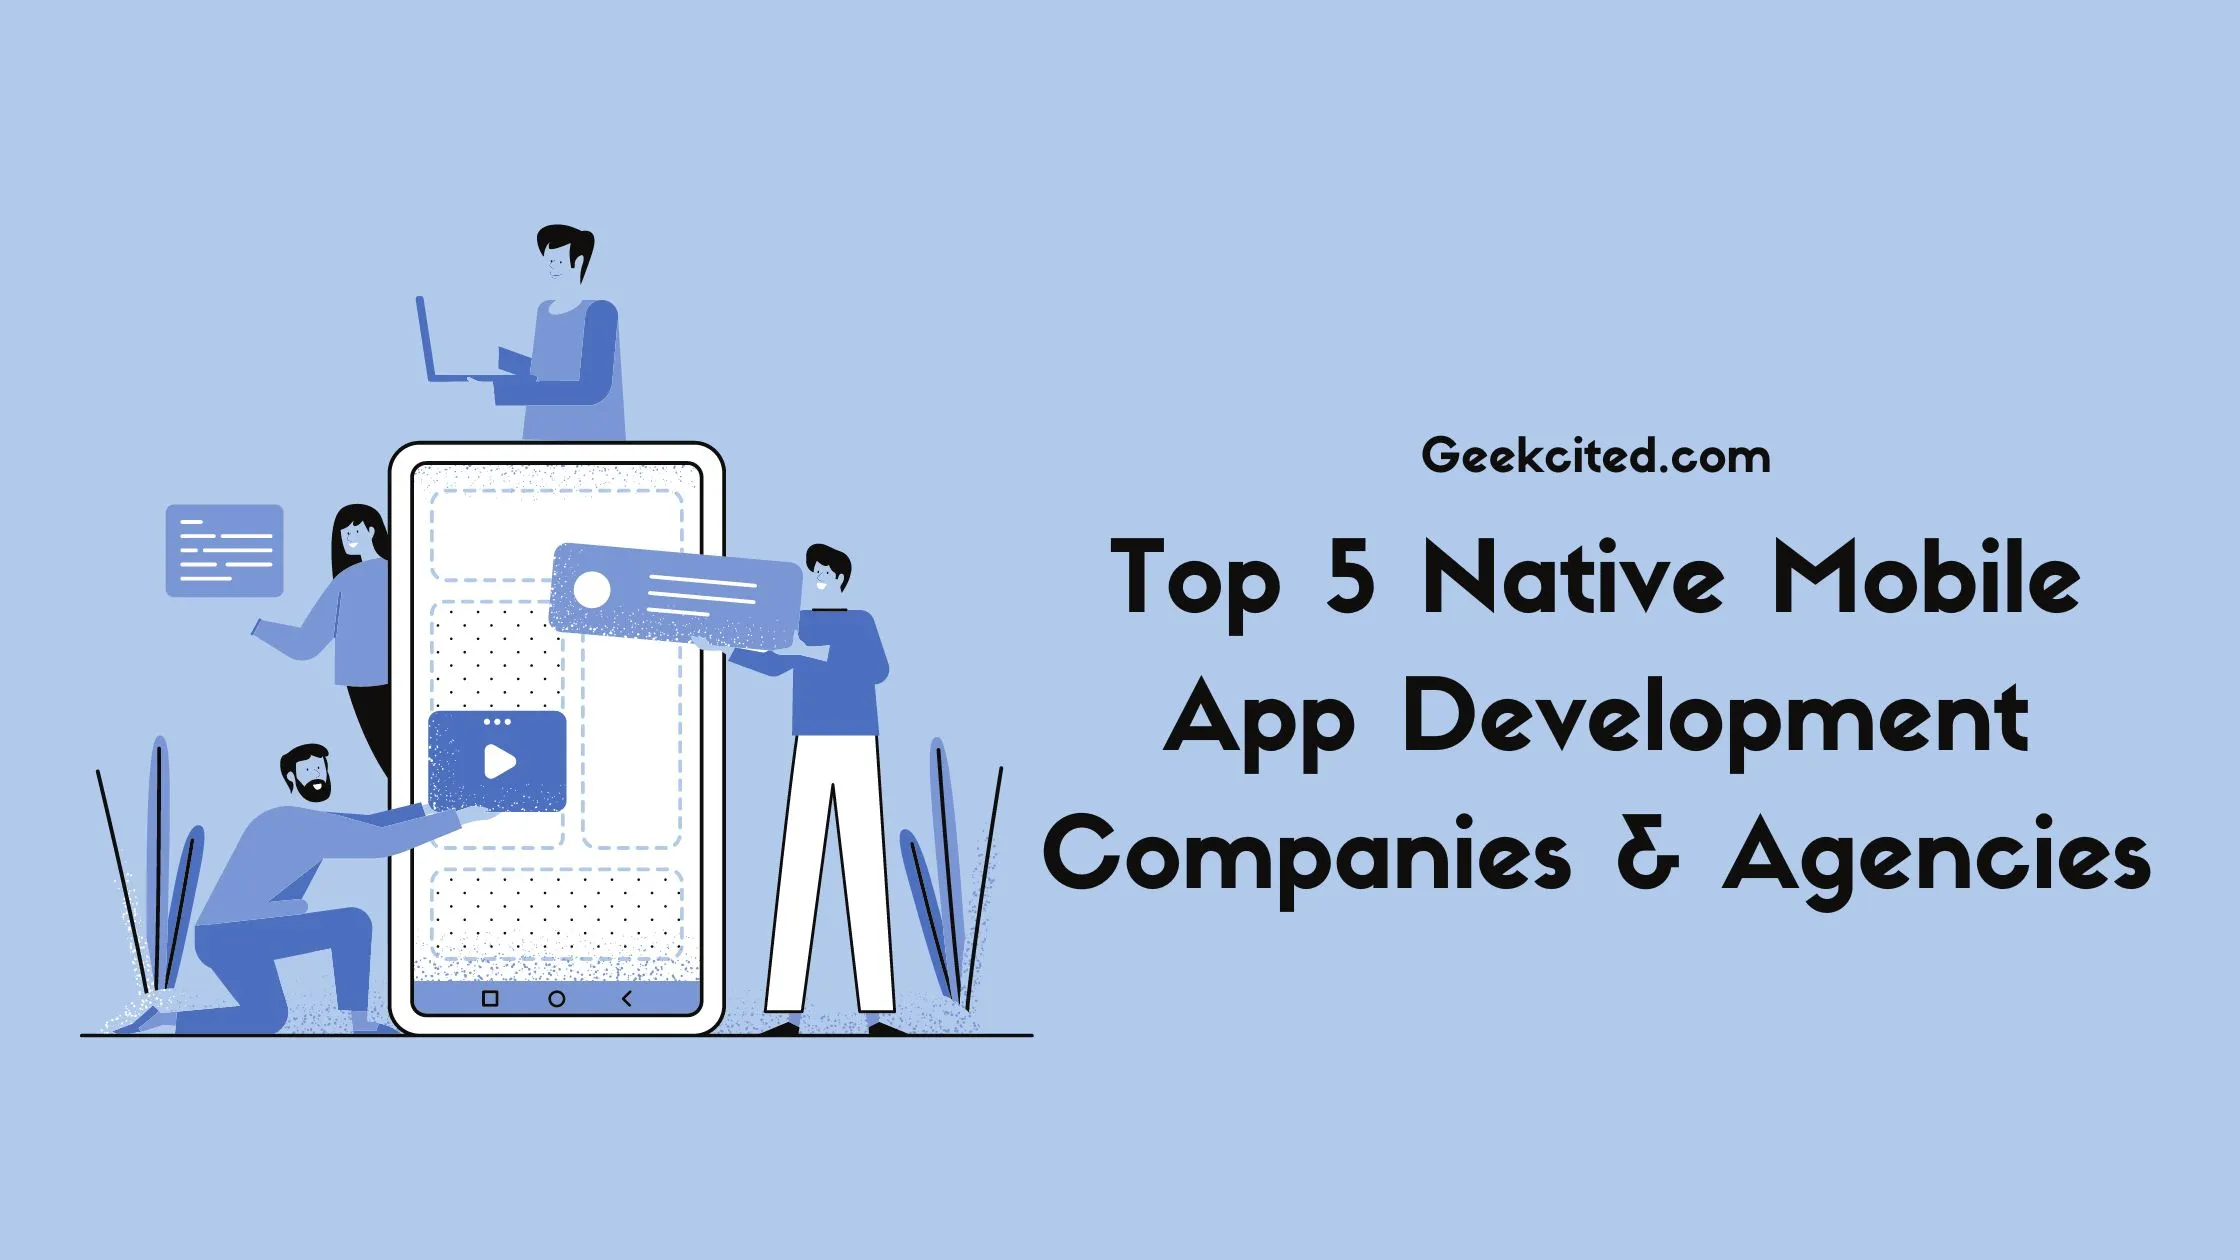 Top 5 Native Mobile App Development Companies & Agencies